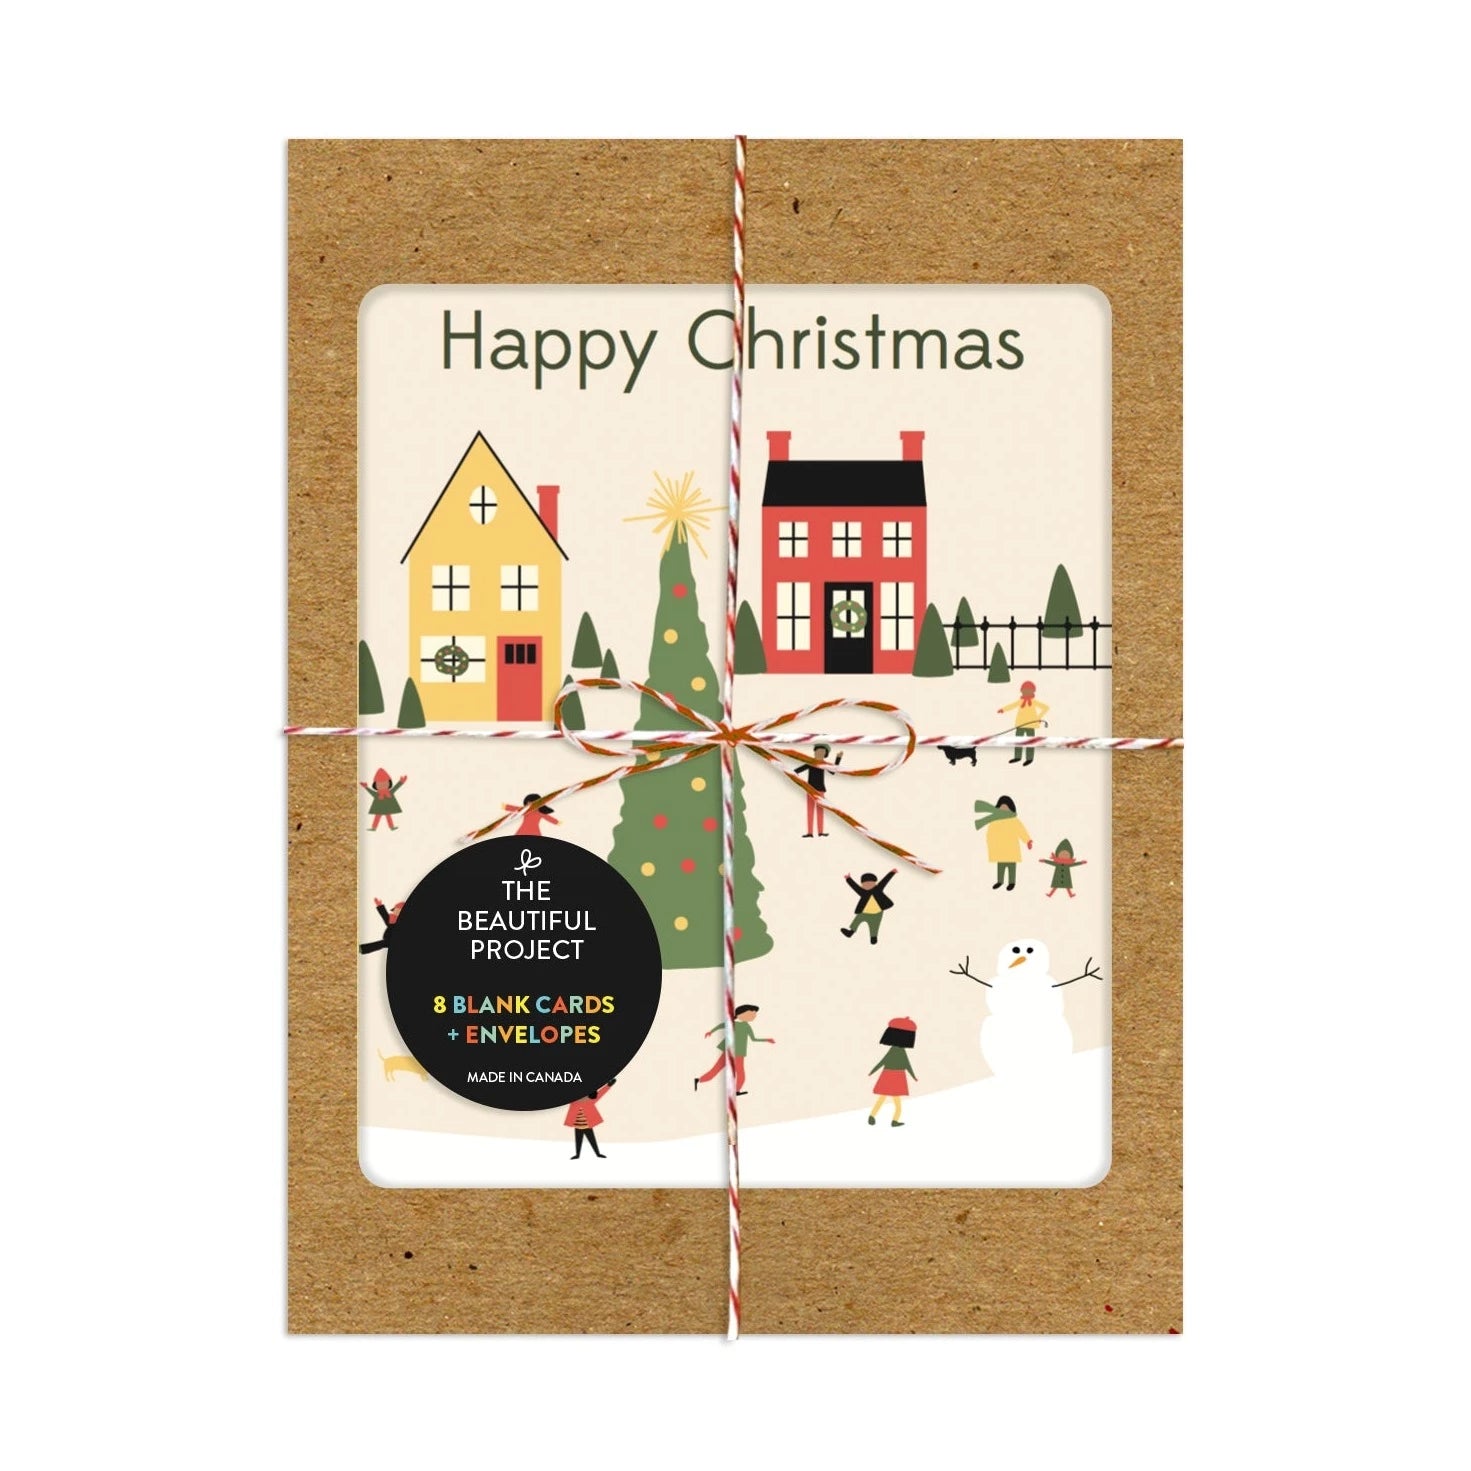 Happy Christmas Village Card Box - Set of 8